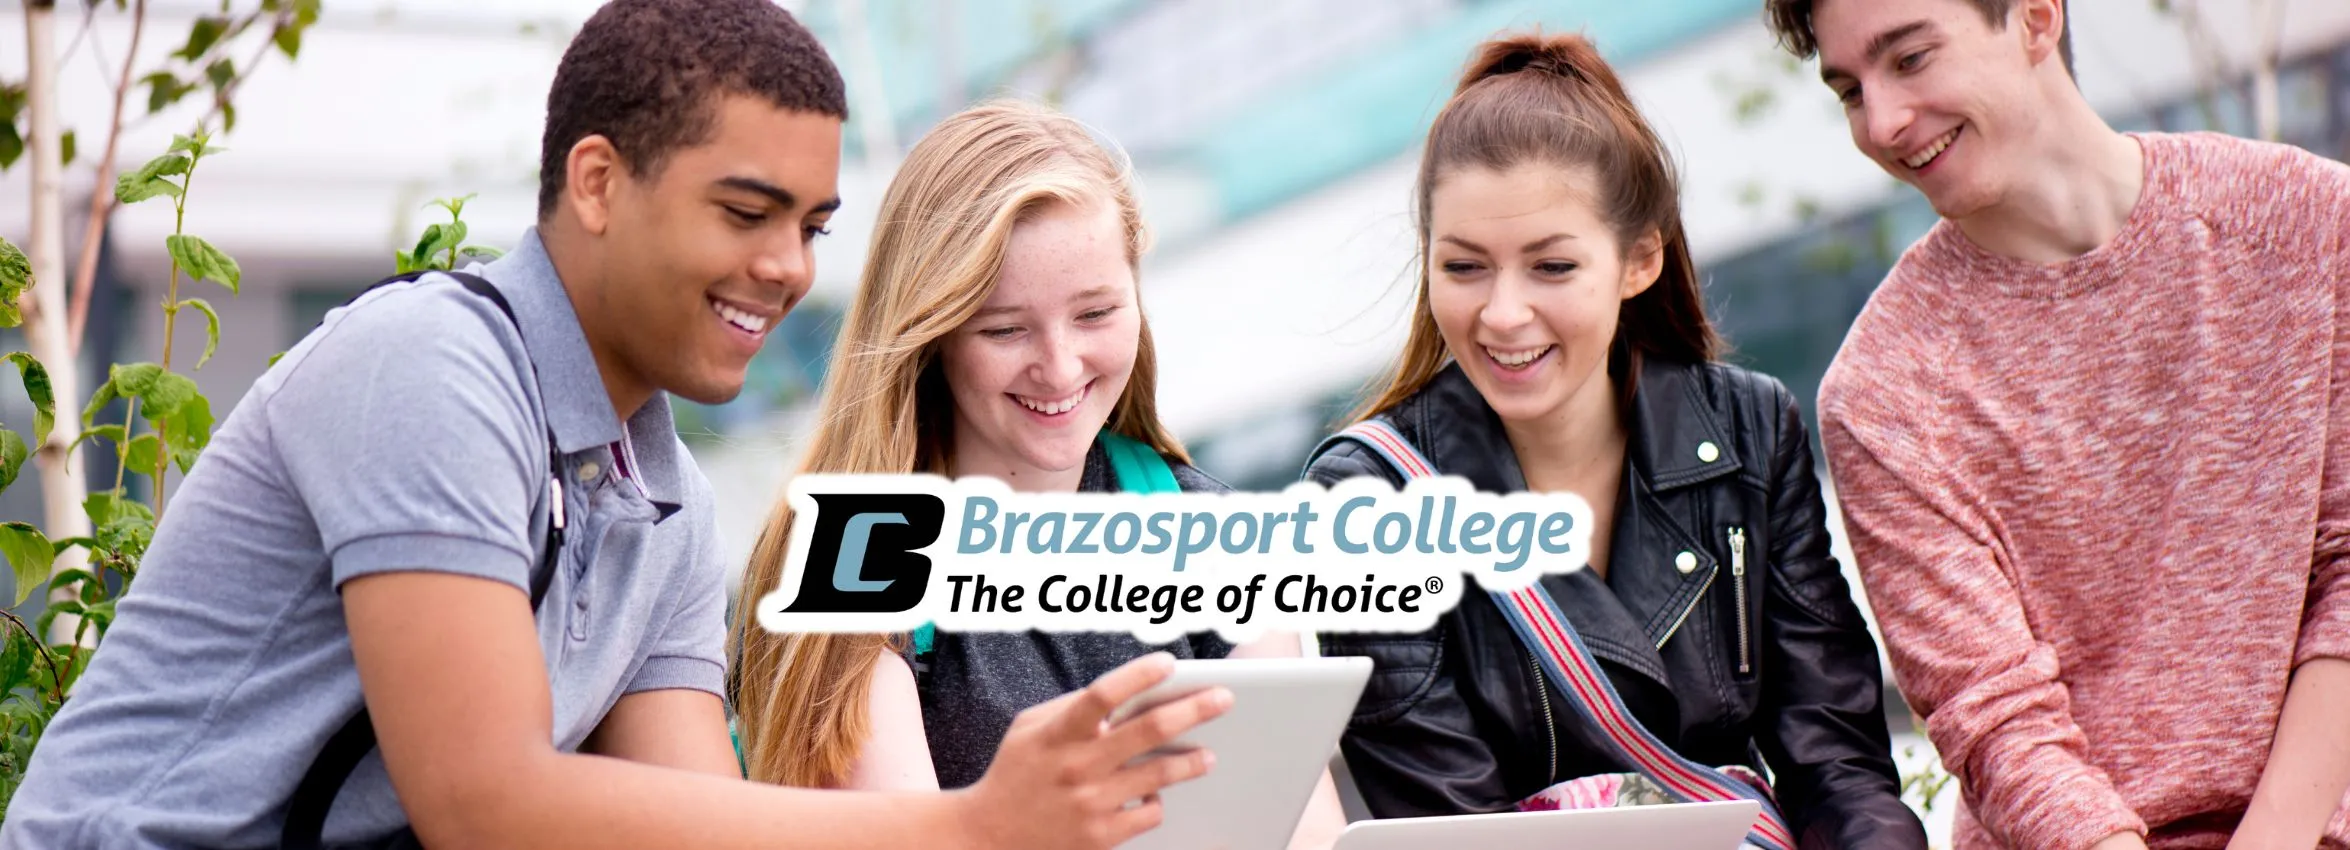 Brazosport-College_Desktop_ET-